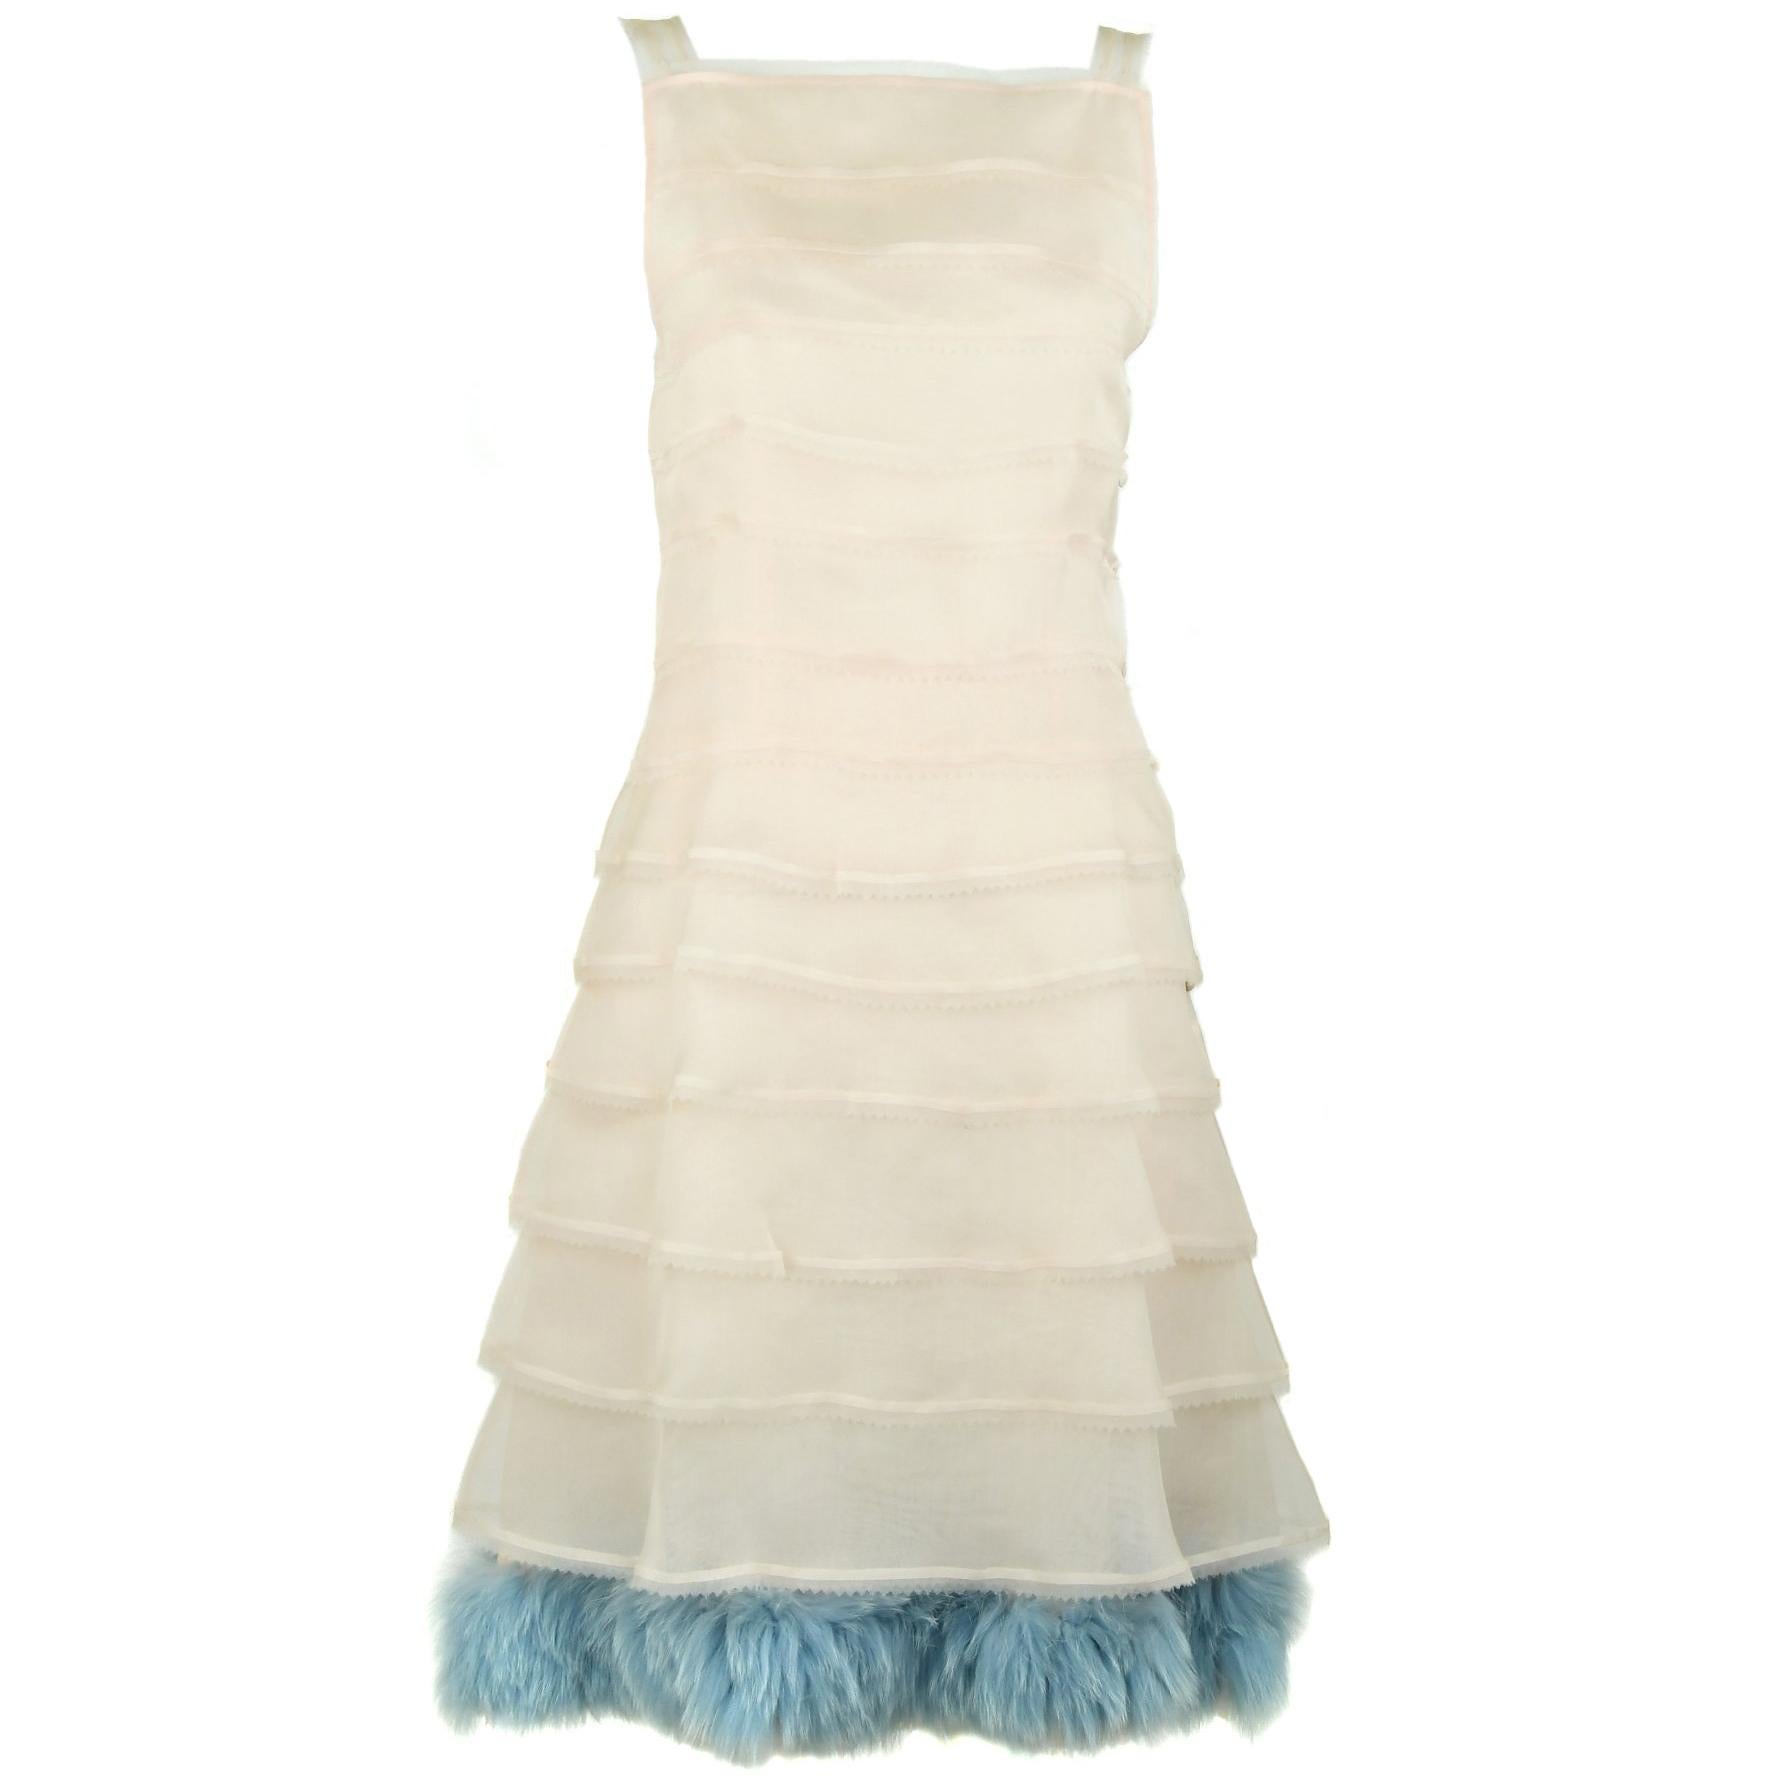 Fendi Peach Organza Dress with Blue Fur Detail - Size IT 38 For Sale